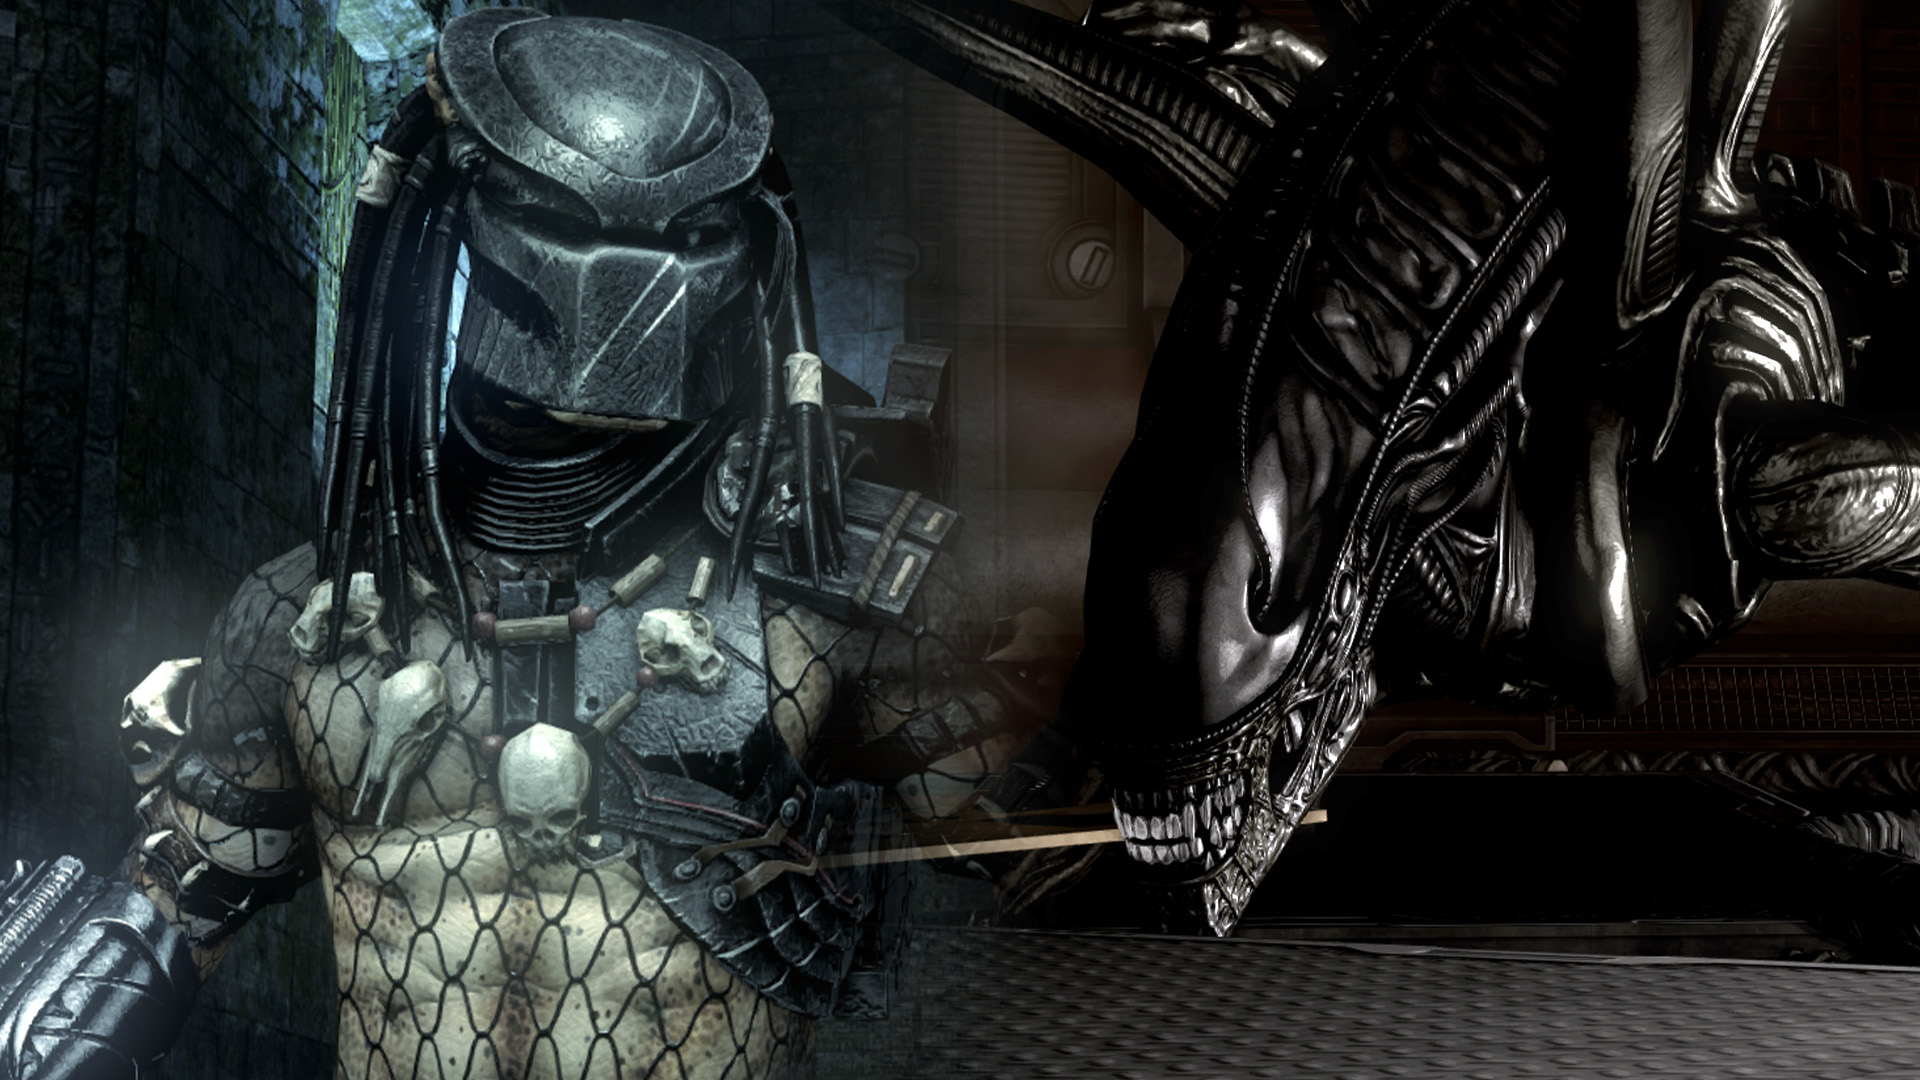 HD wallpaper: Predator, AVP: Alien vs. Predator